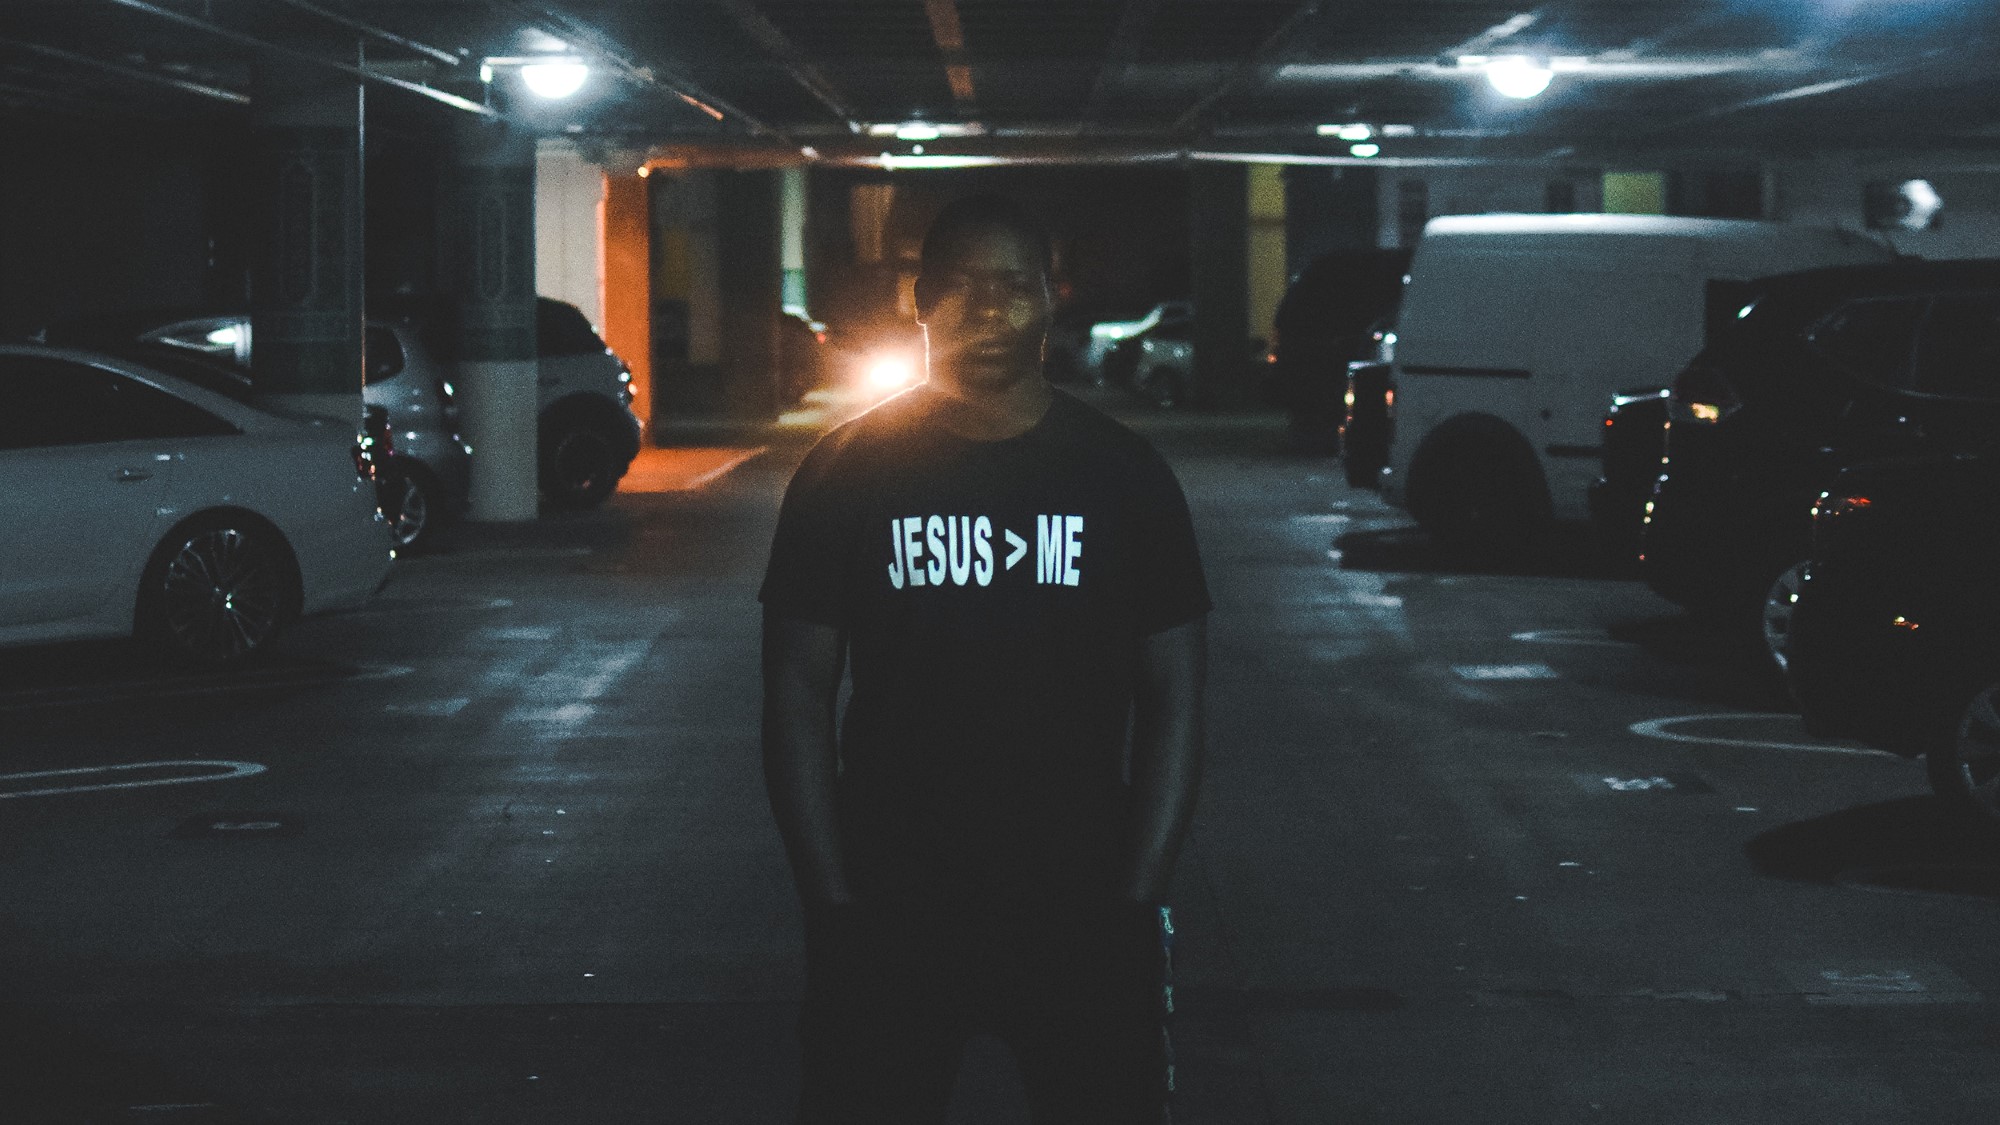 Mann i garasje iført t-skjorte med trykk "Jesus > Me"